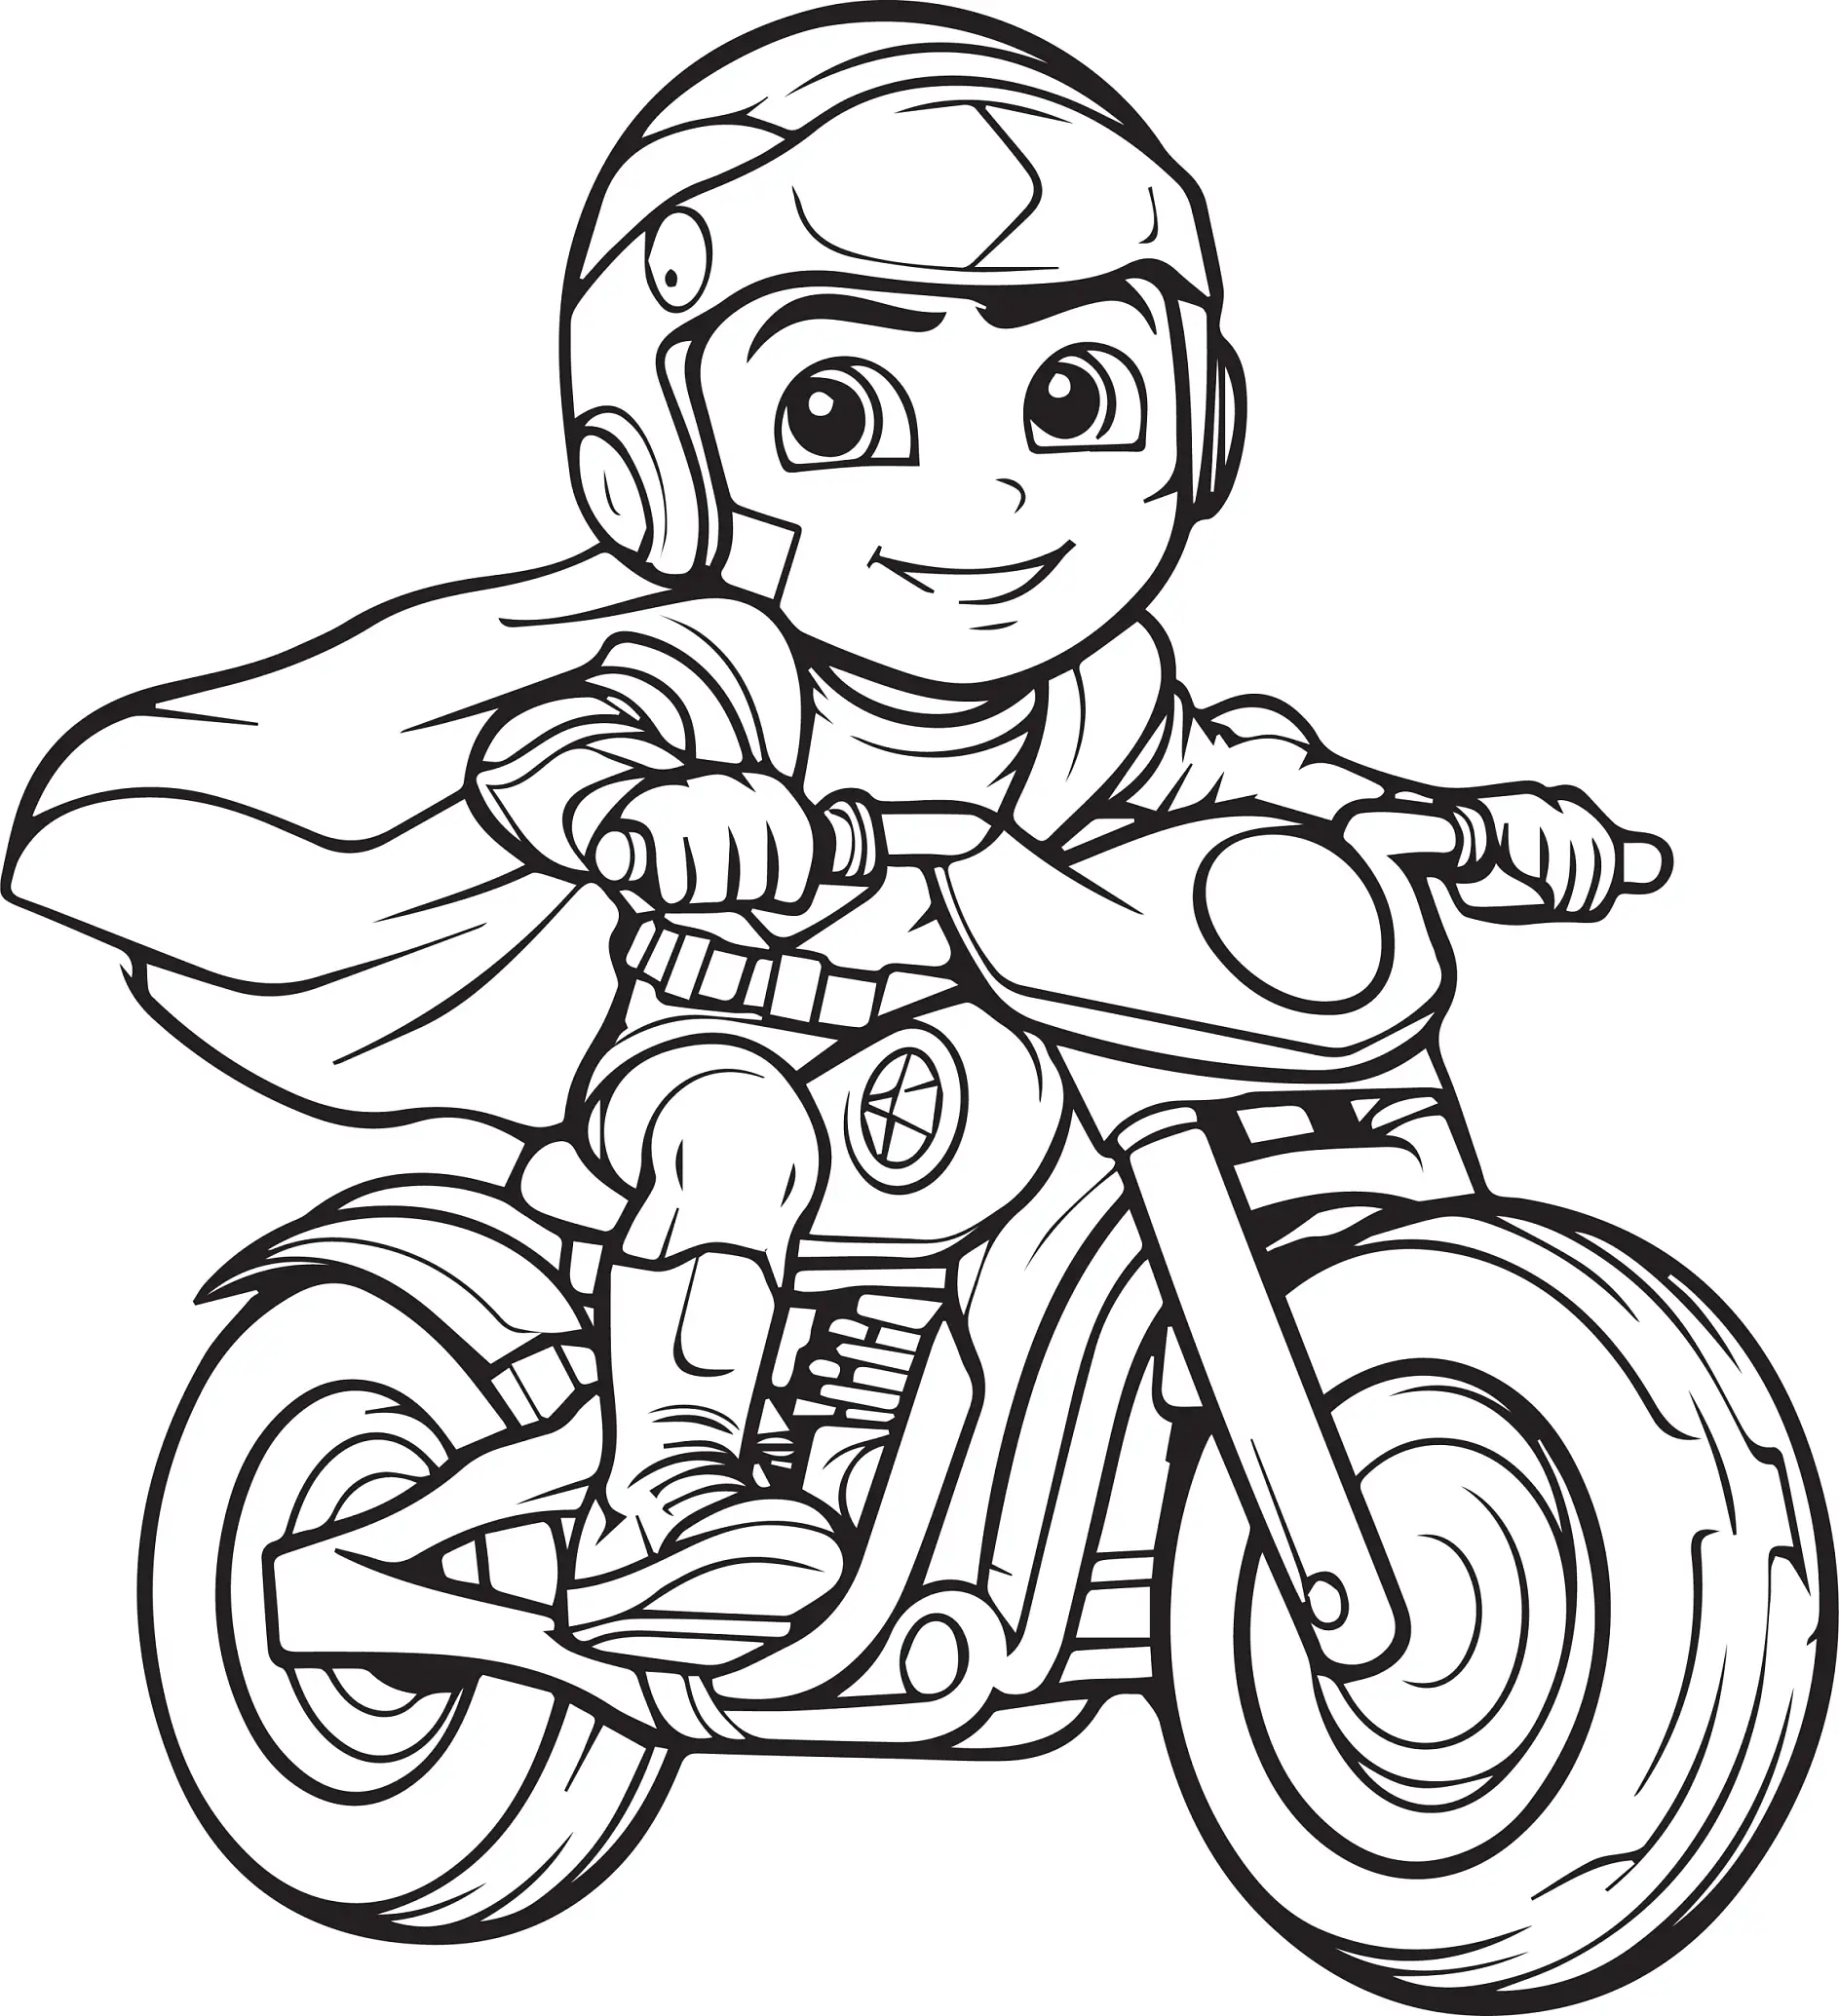 Ausmalbild Motorrad mit Superheld